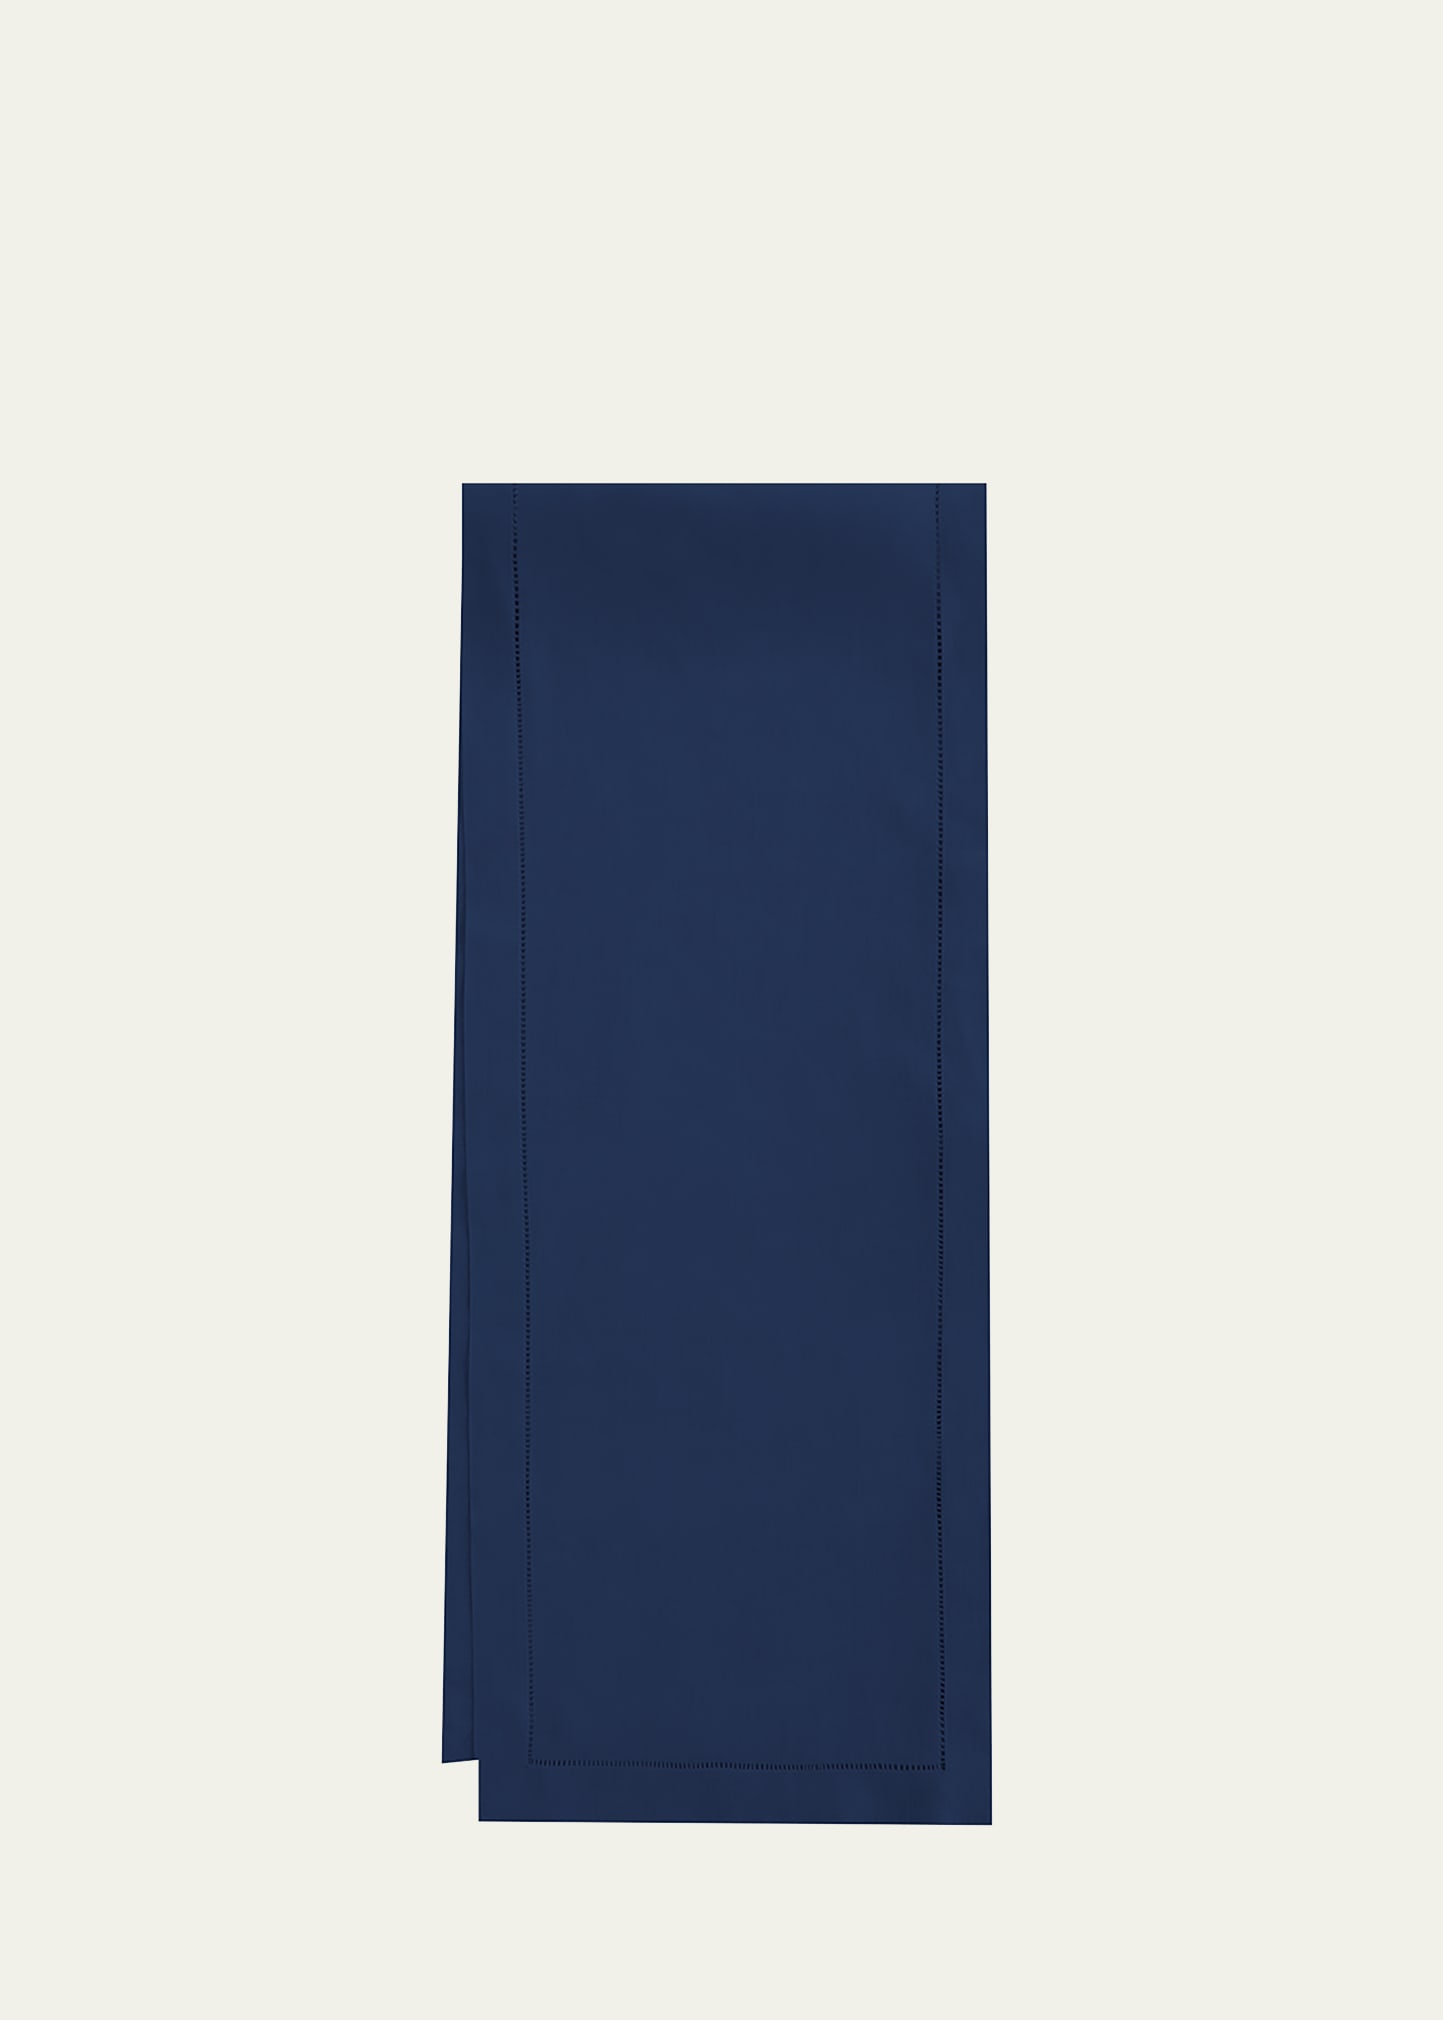 Sferra Hemstitch Table Runner, 15" X 90" In Blue